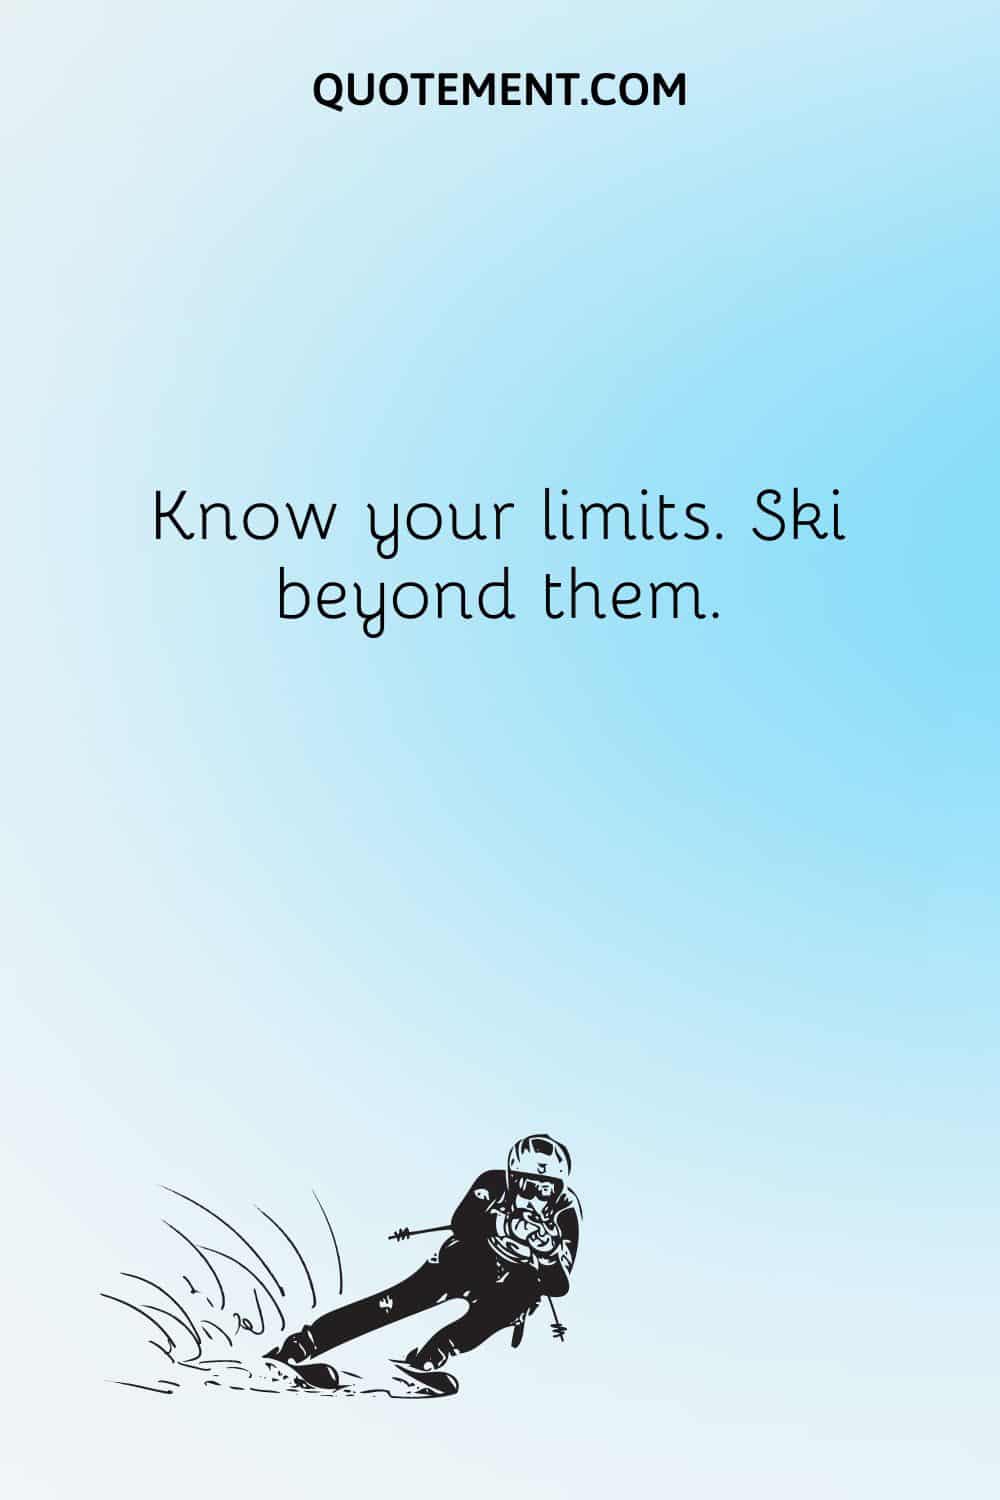 man skiing illustration representing ski Instagram caption